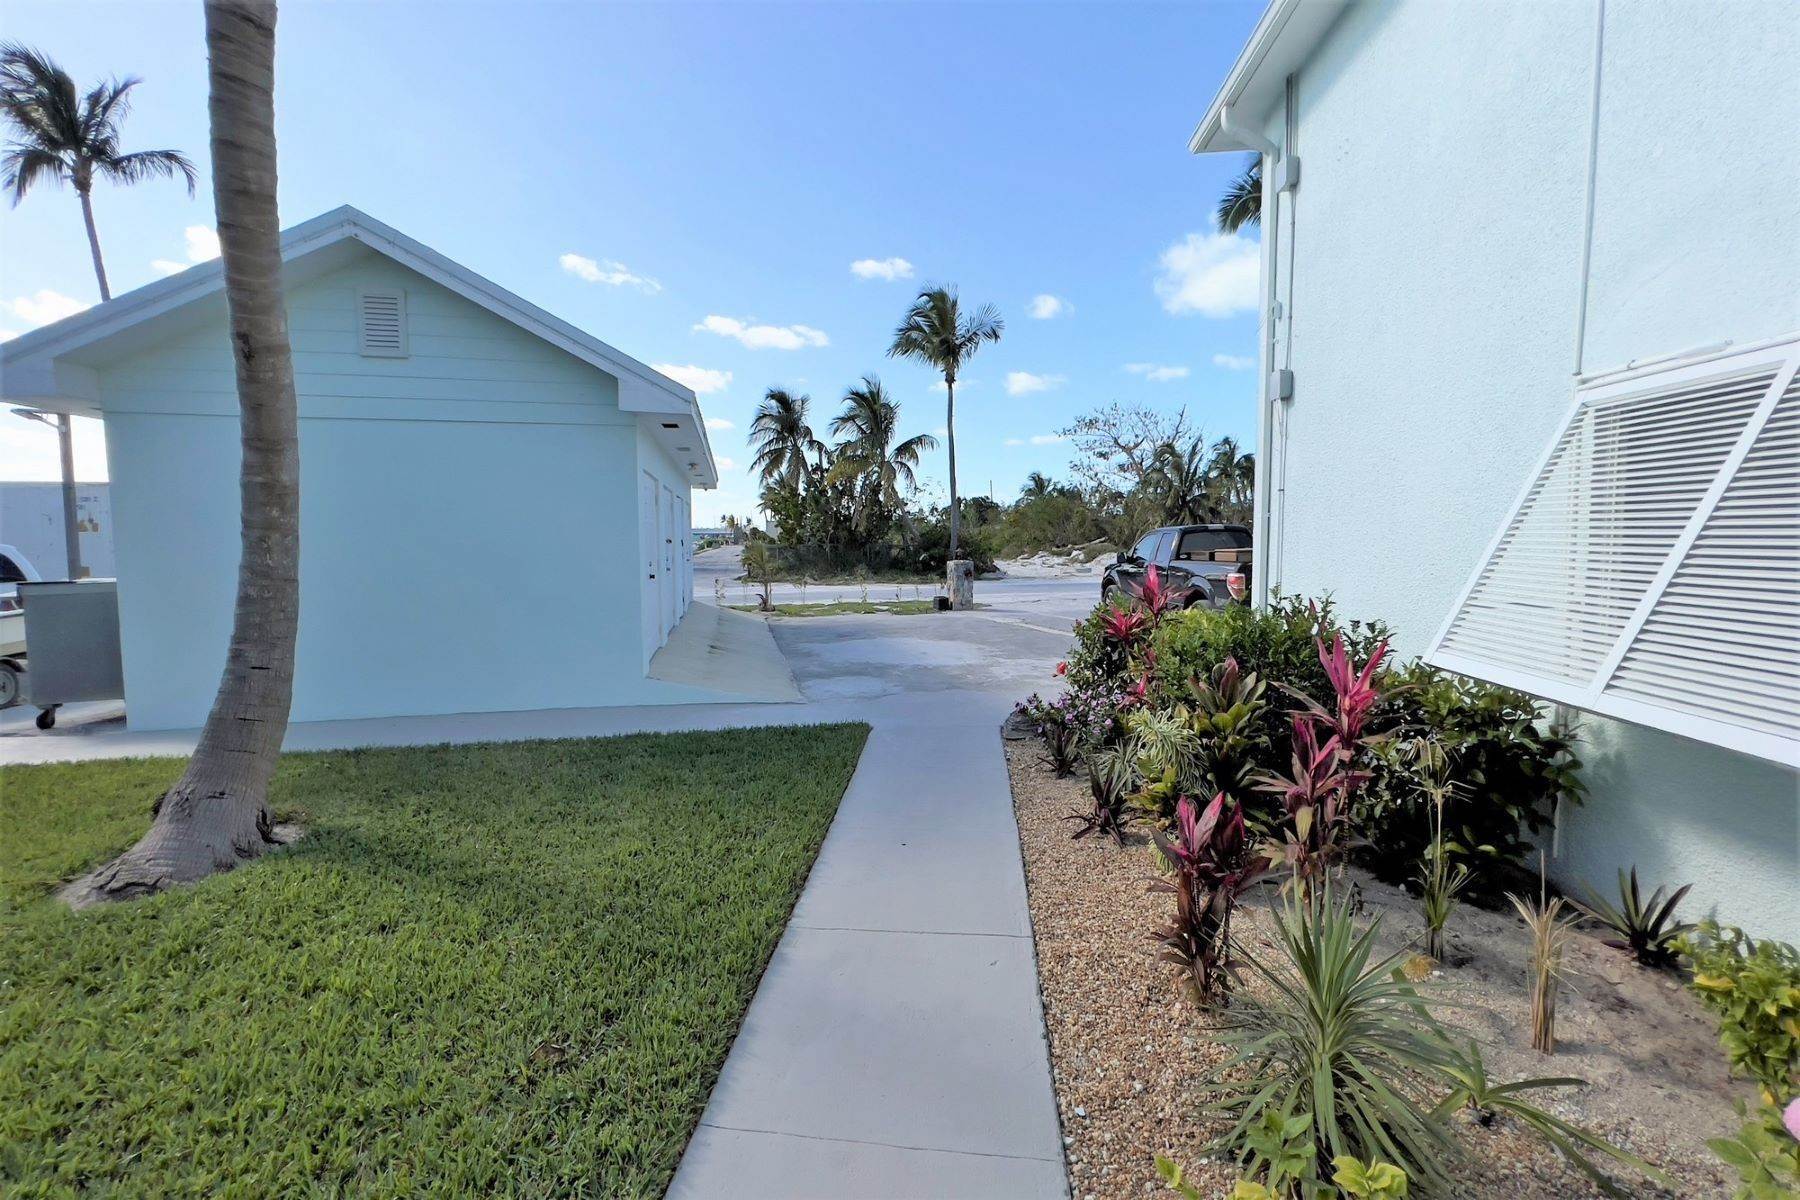 21. Condominiums for Sale at Atlantis 2104 with Dock and Golf Cart Garage Treasure Cay, Abaco, Bahamas